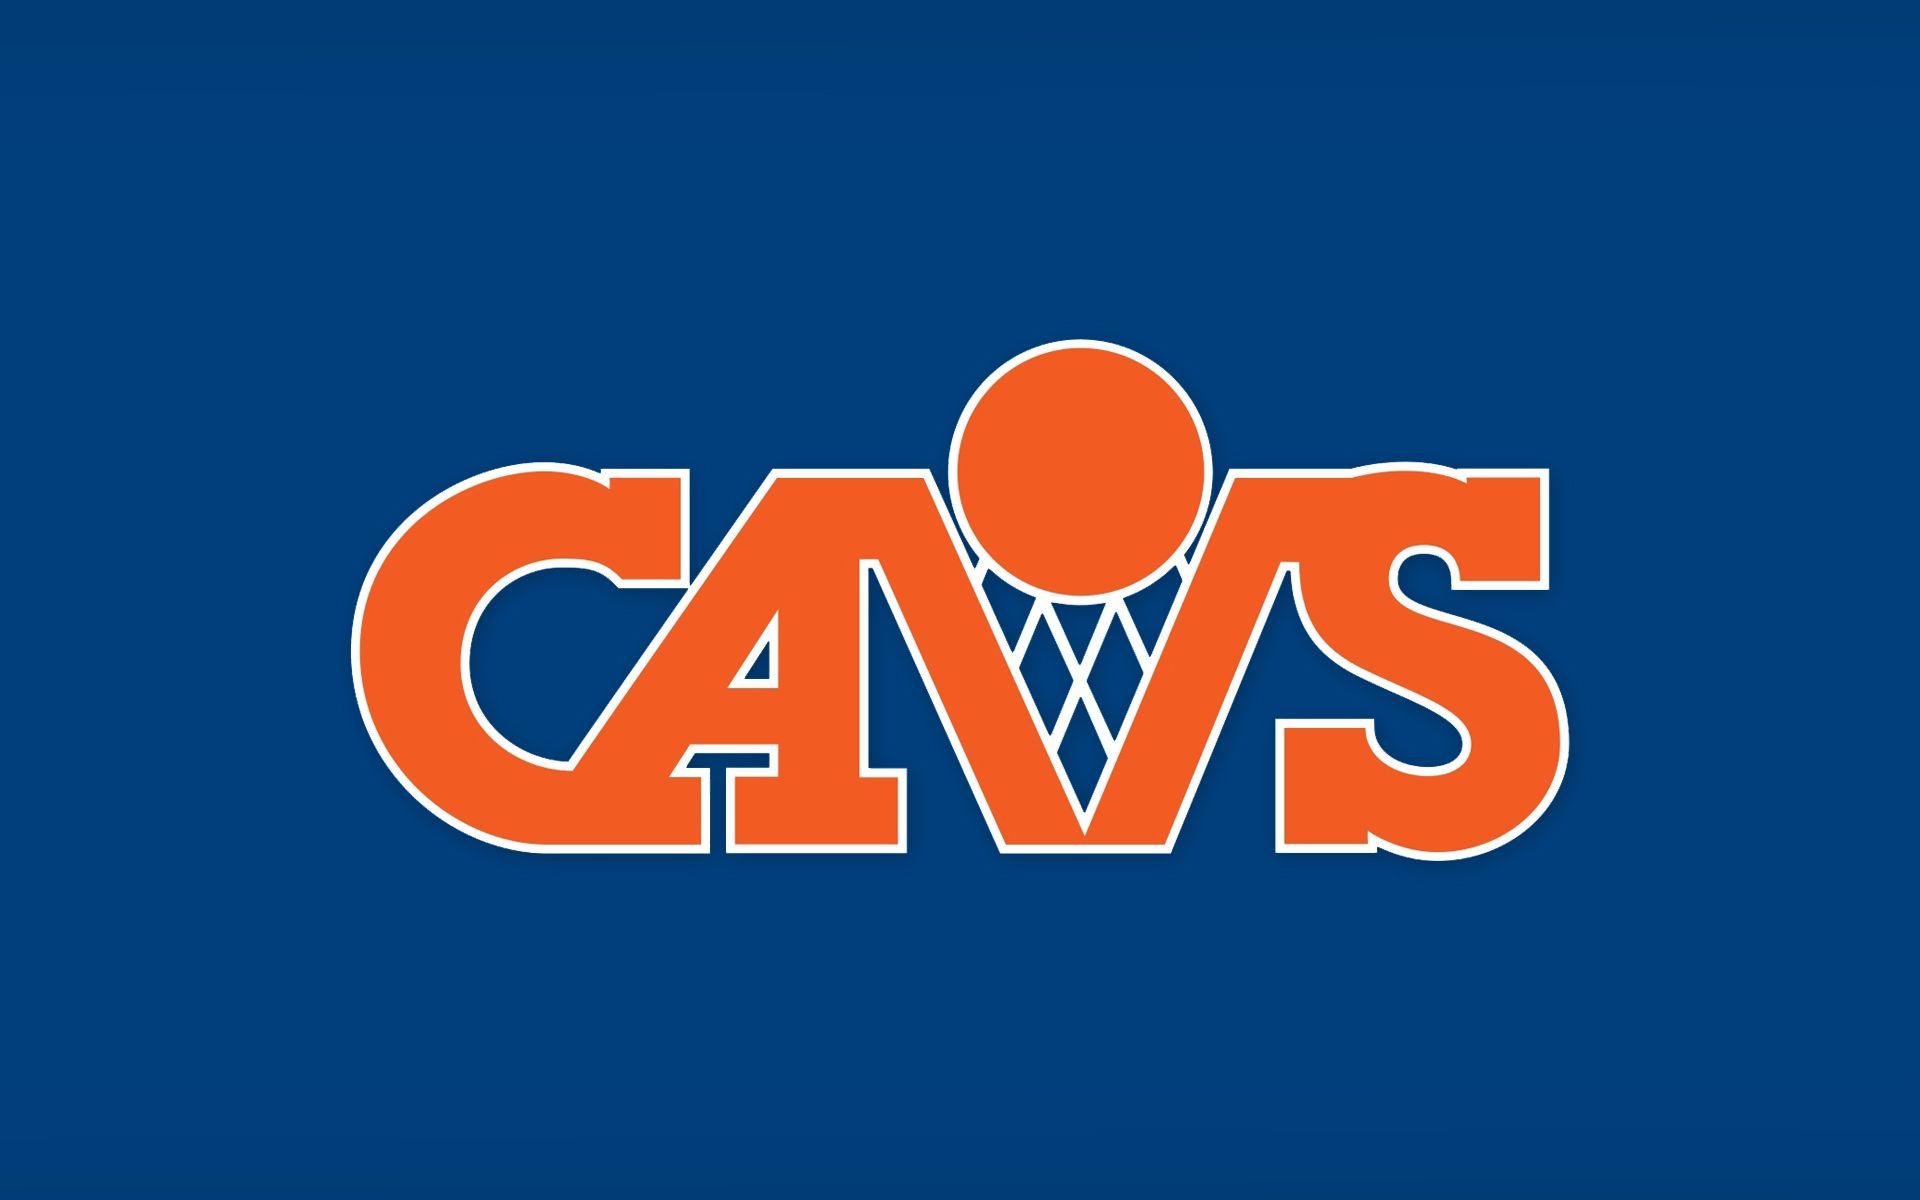 cavaliers logo wallpaper